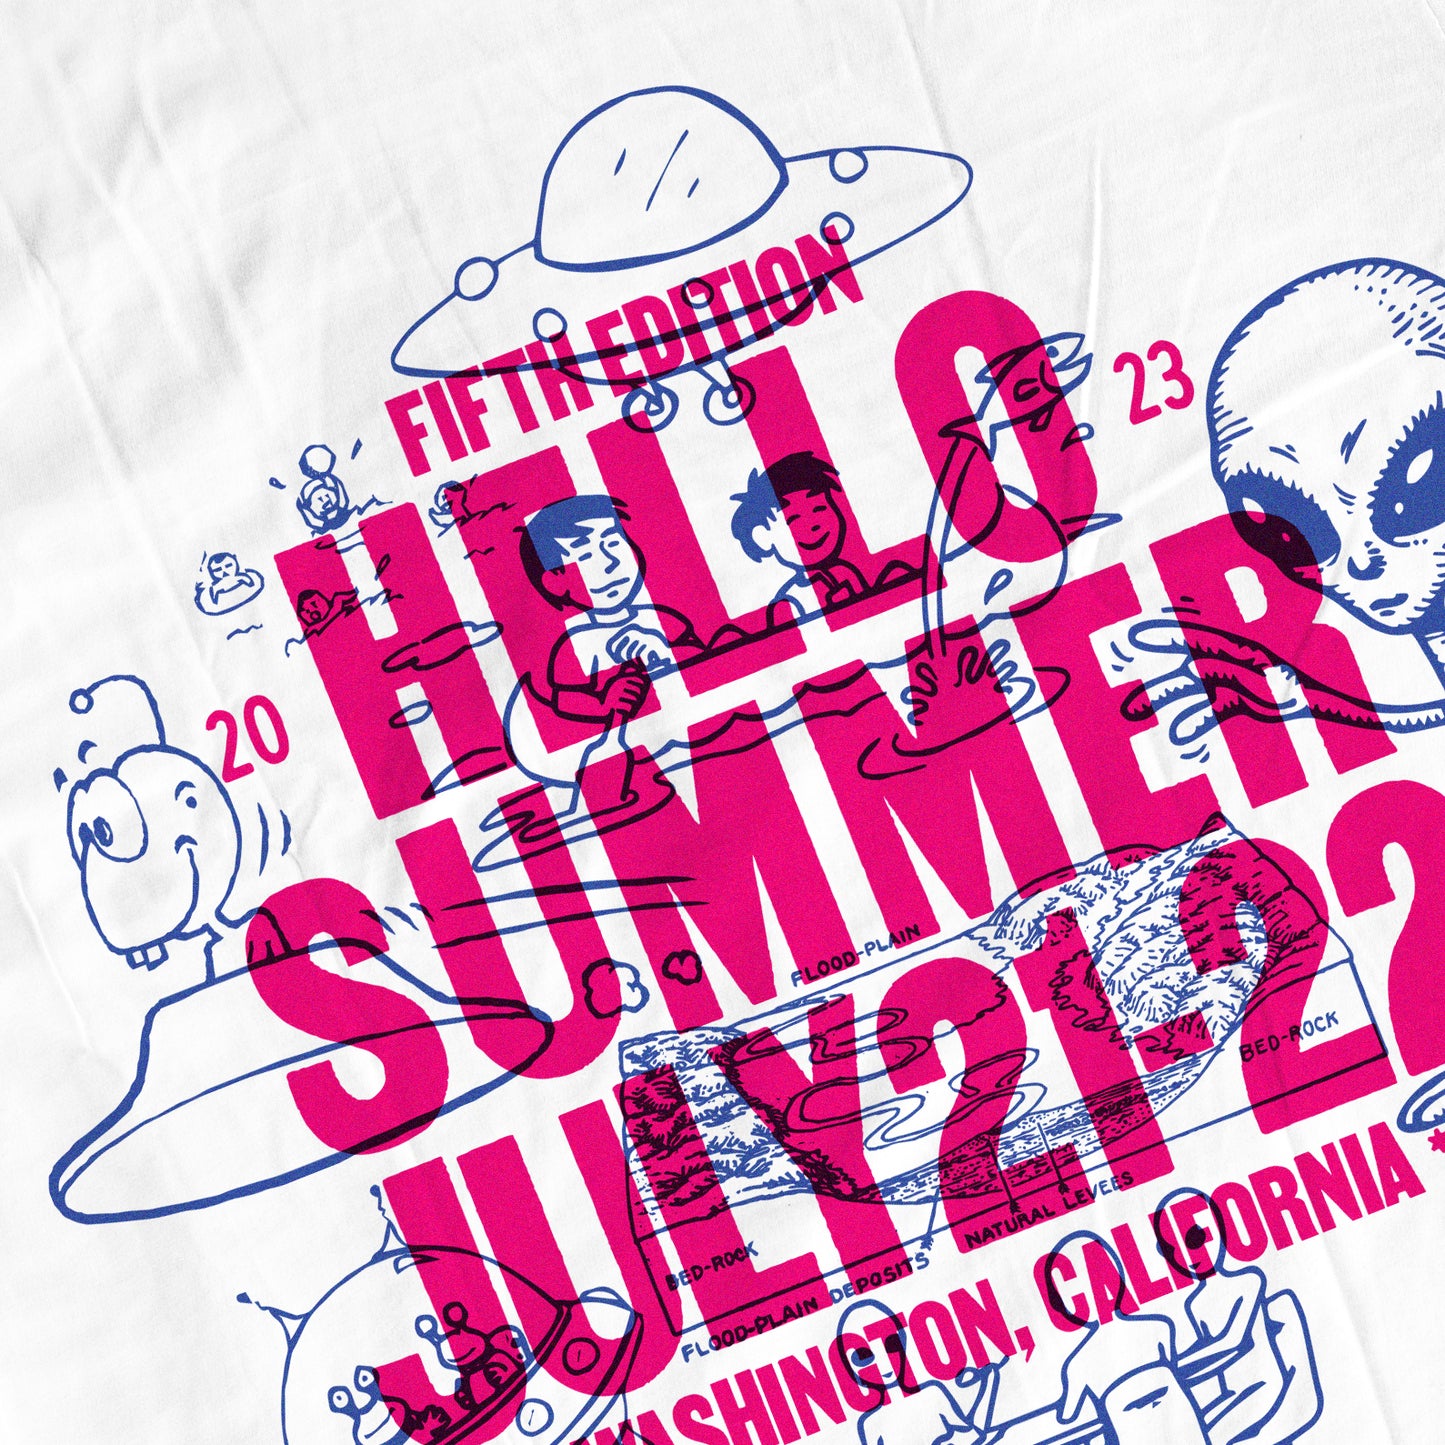 Hello Summer - Pink / Blue